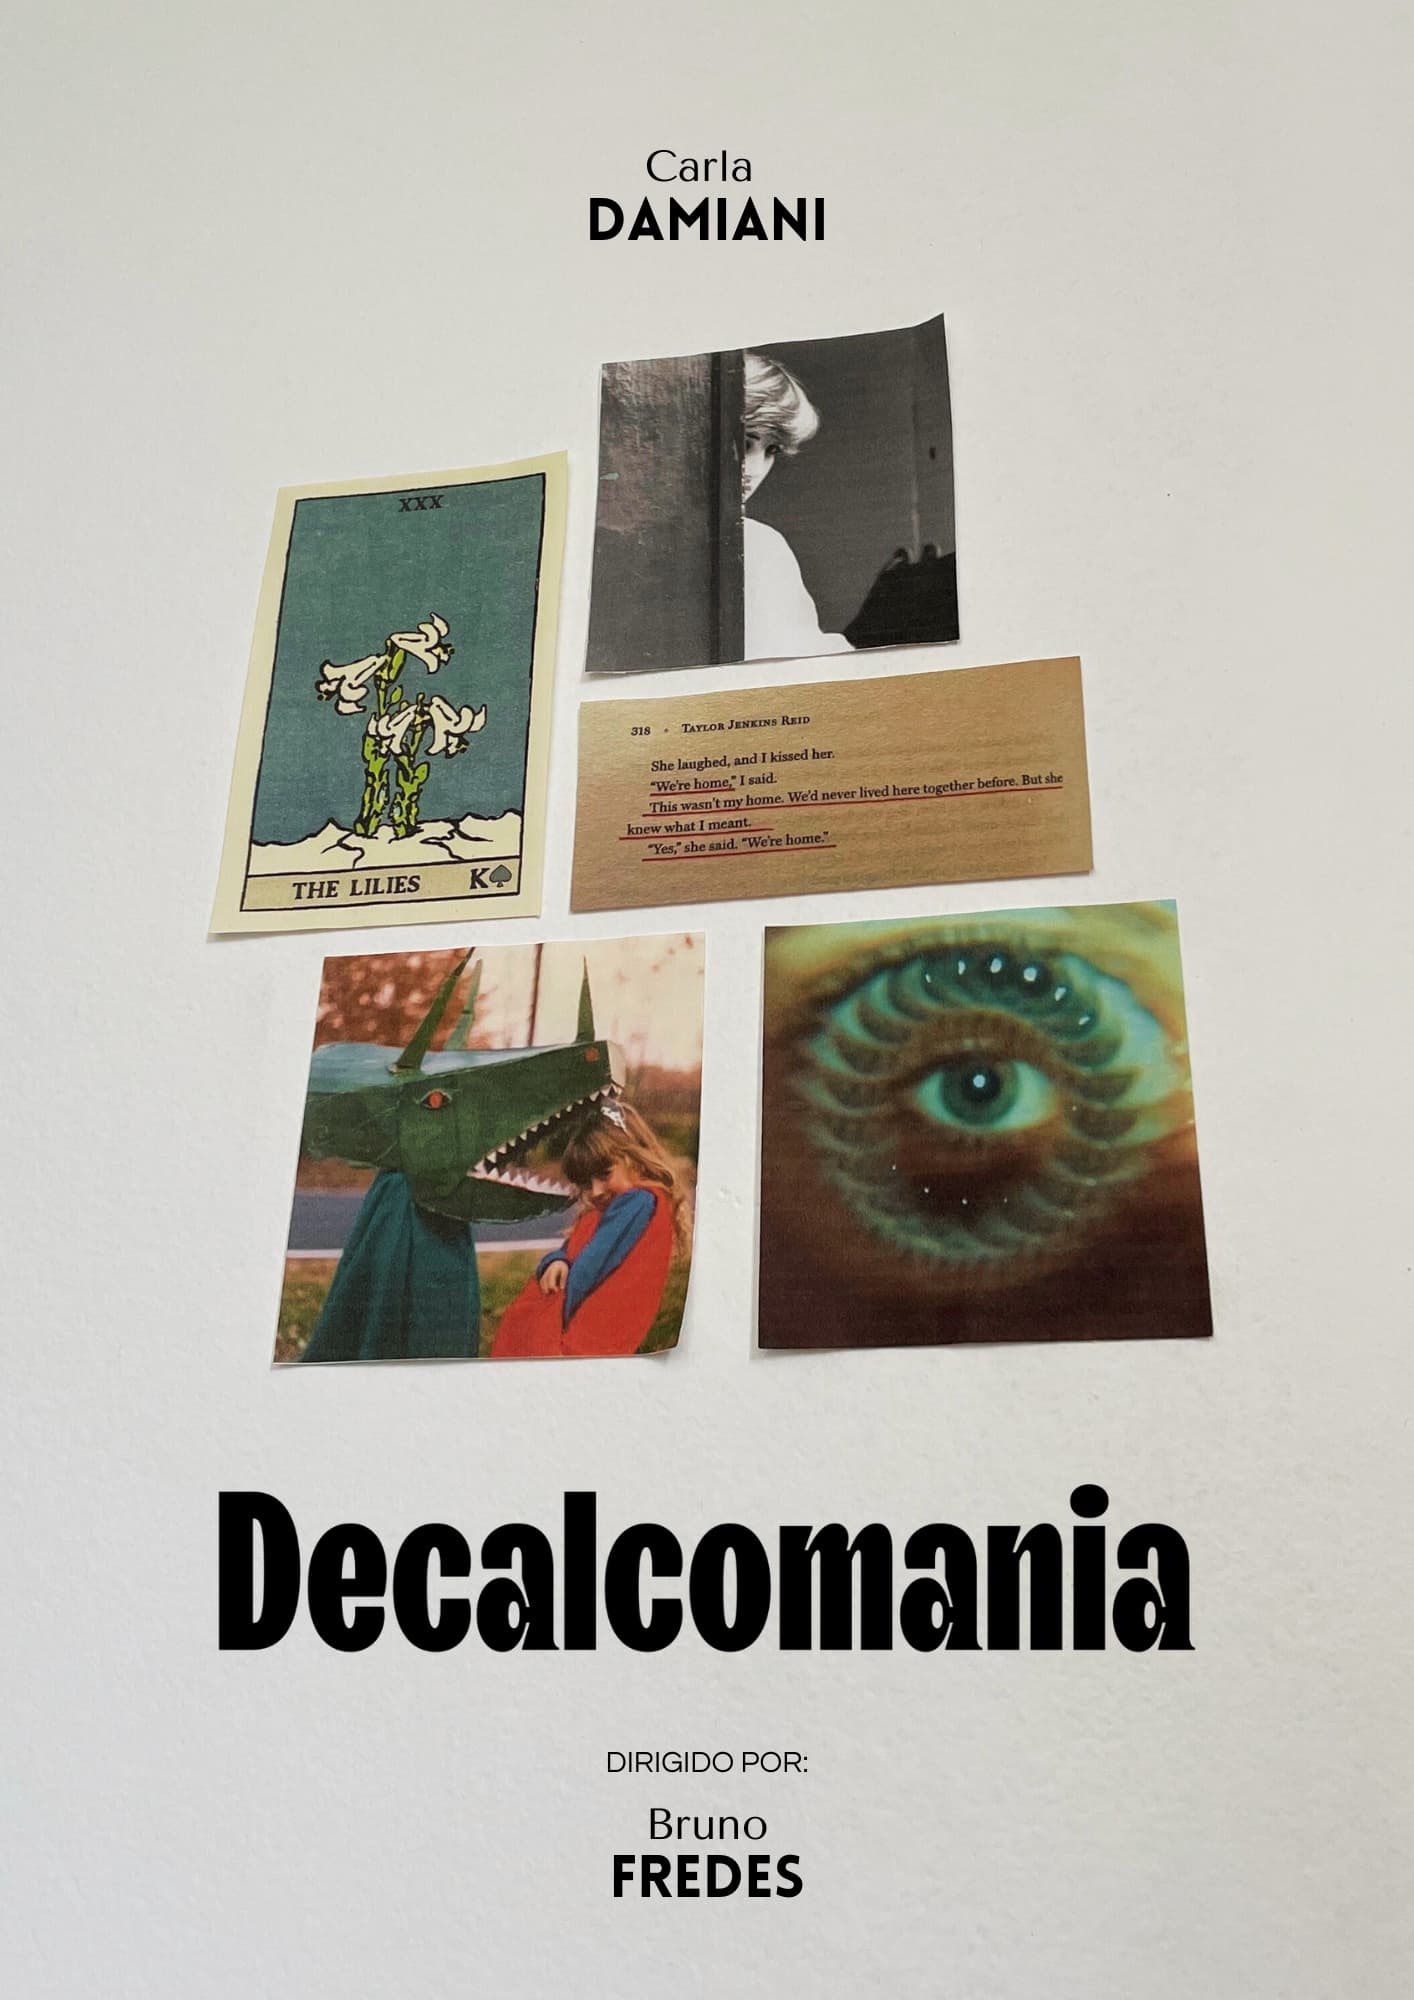 Decalcomania